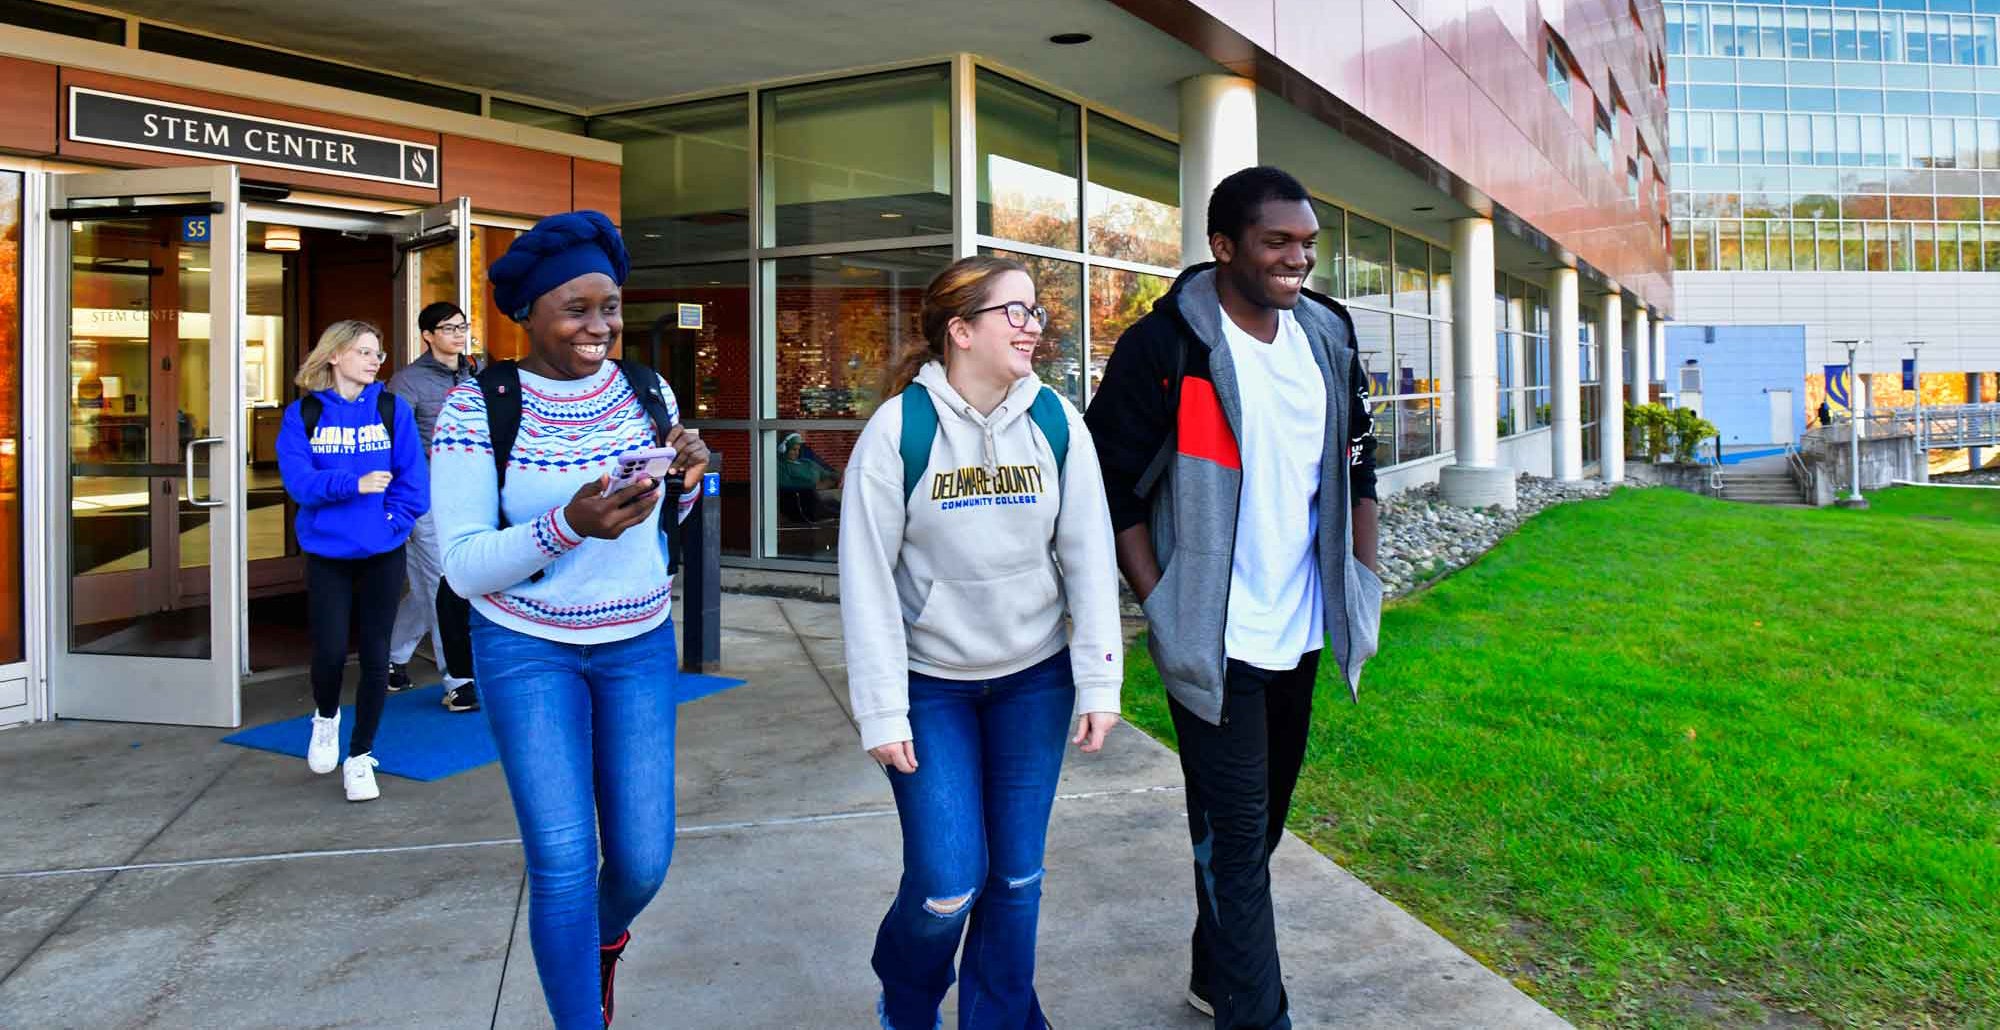 ӰԺ students walking on campus